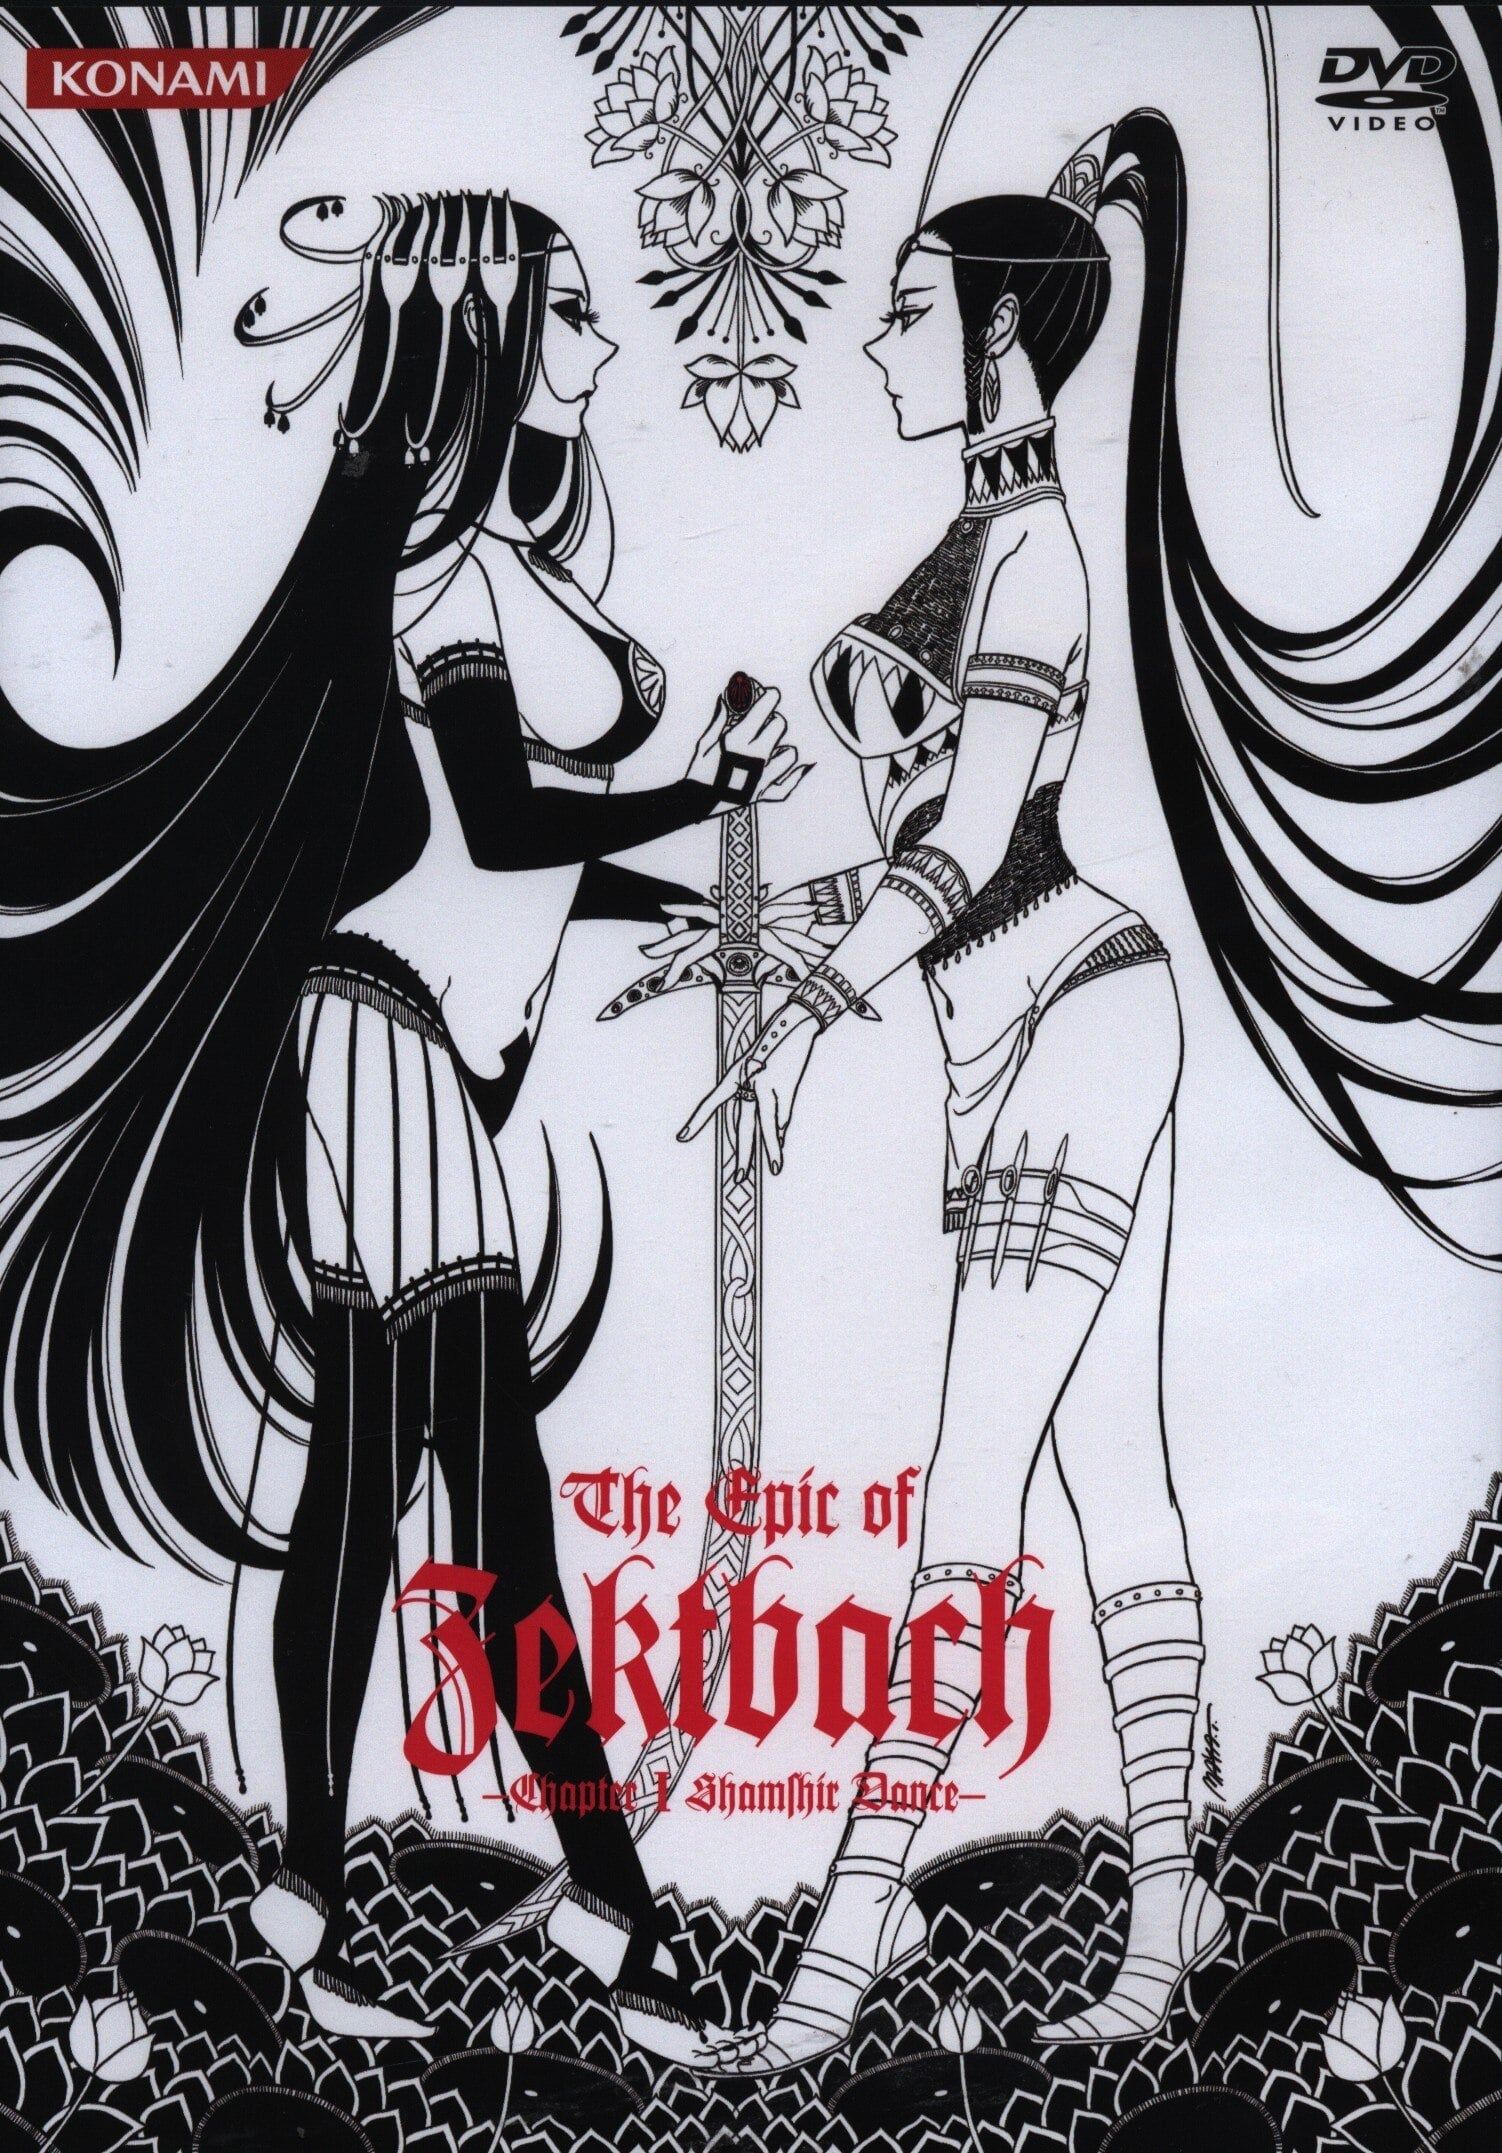 [Fantasy] The Epic of Zektbach OVA (OVA) (Sub) New Released